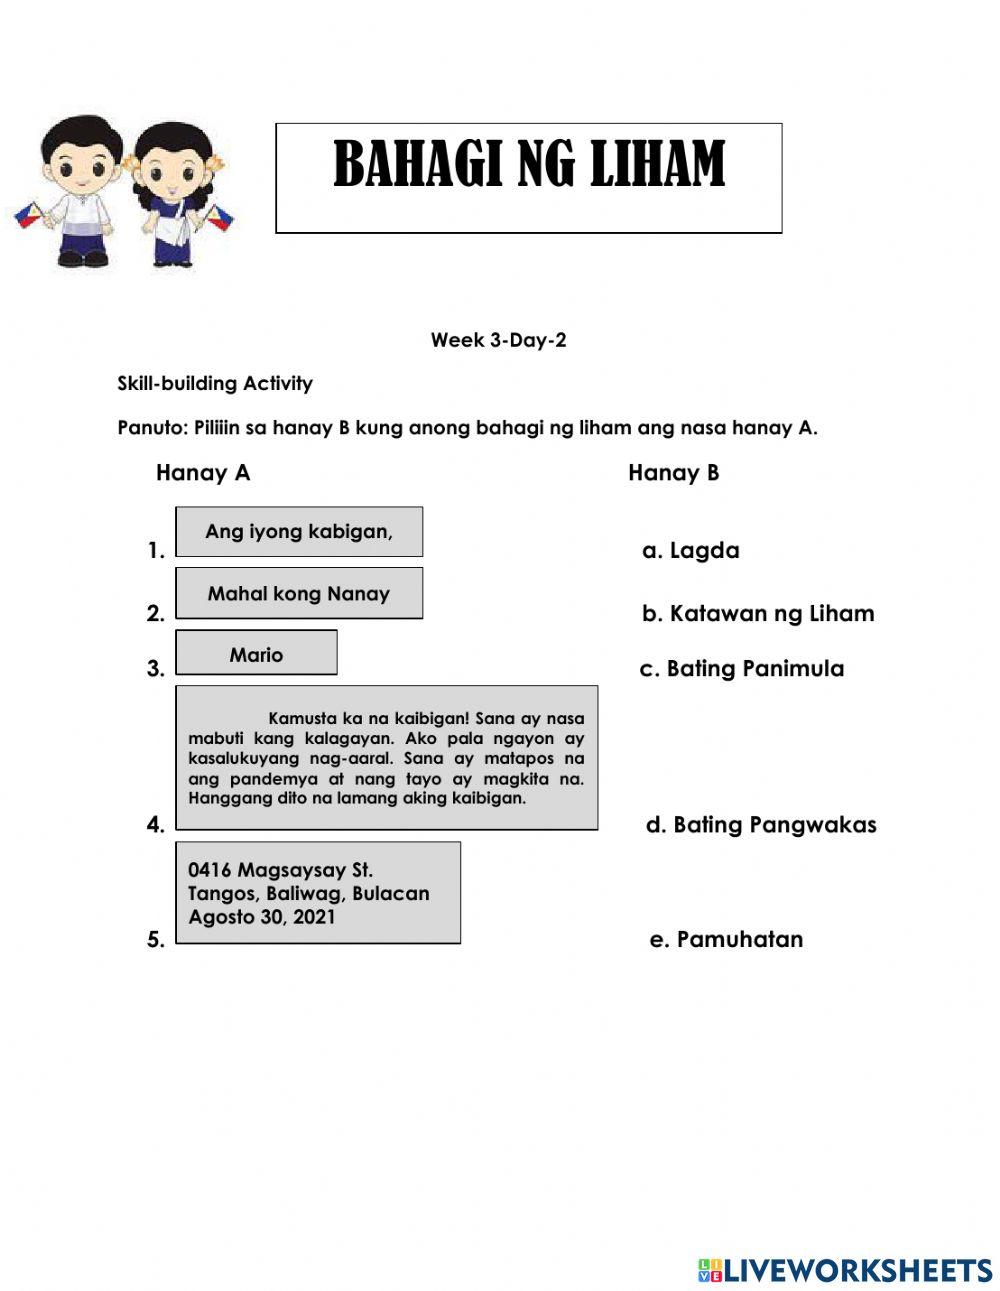 Bahagi ng Liham Worksheet - 2 online exercise for | Live Worksheets